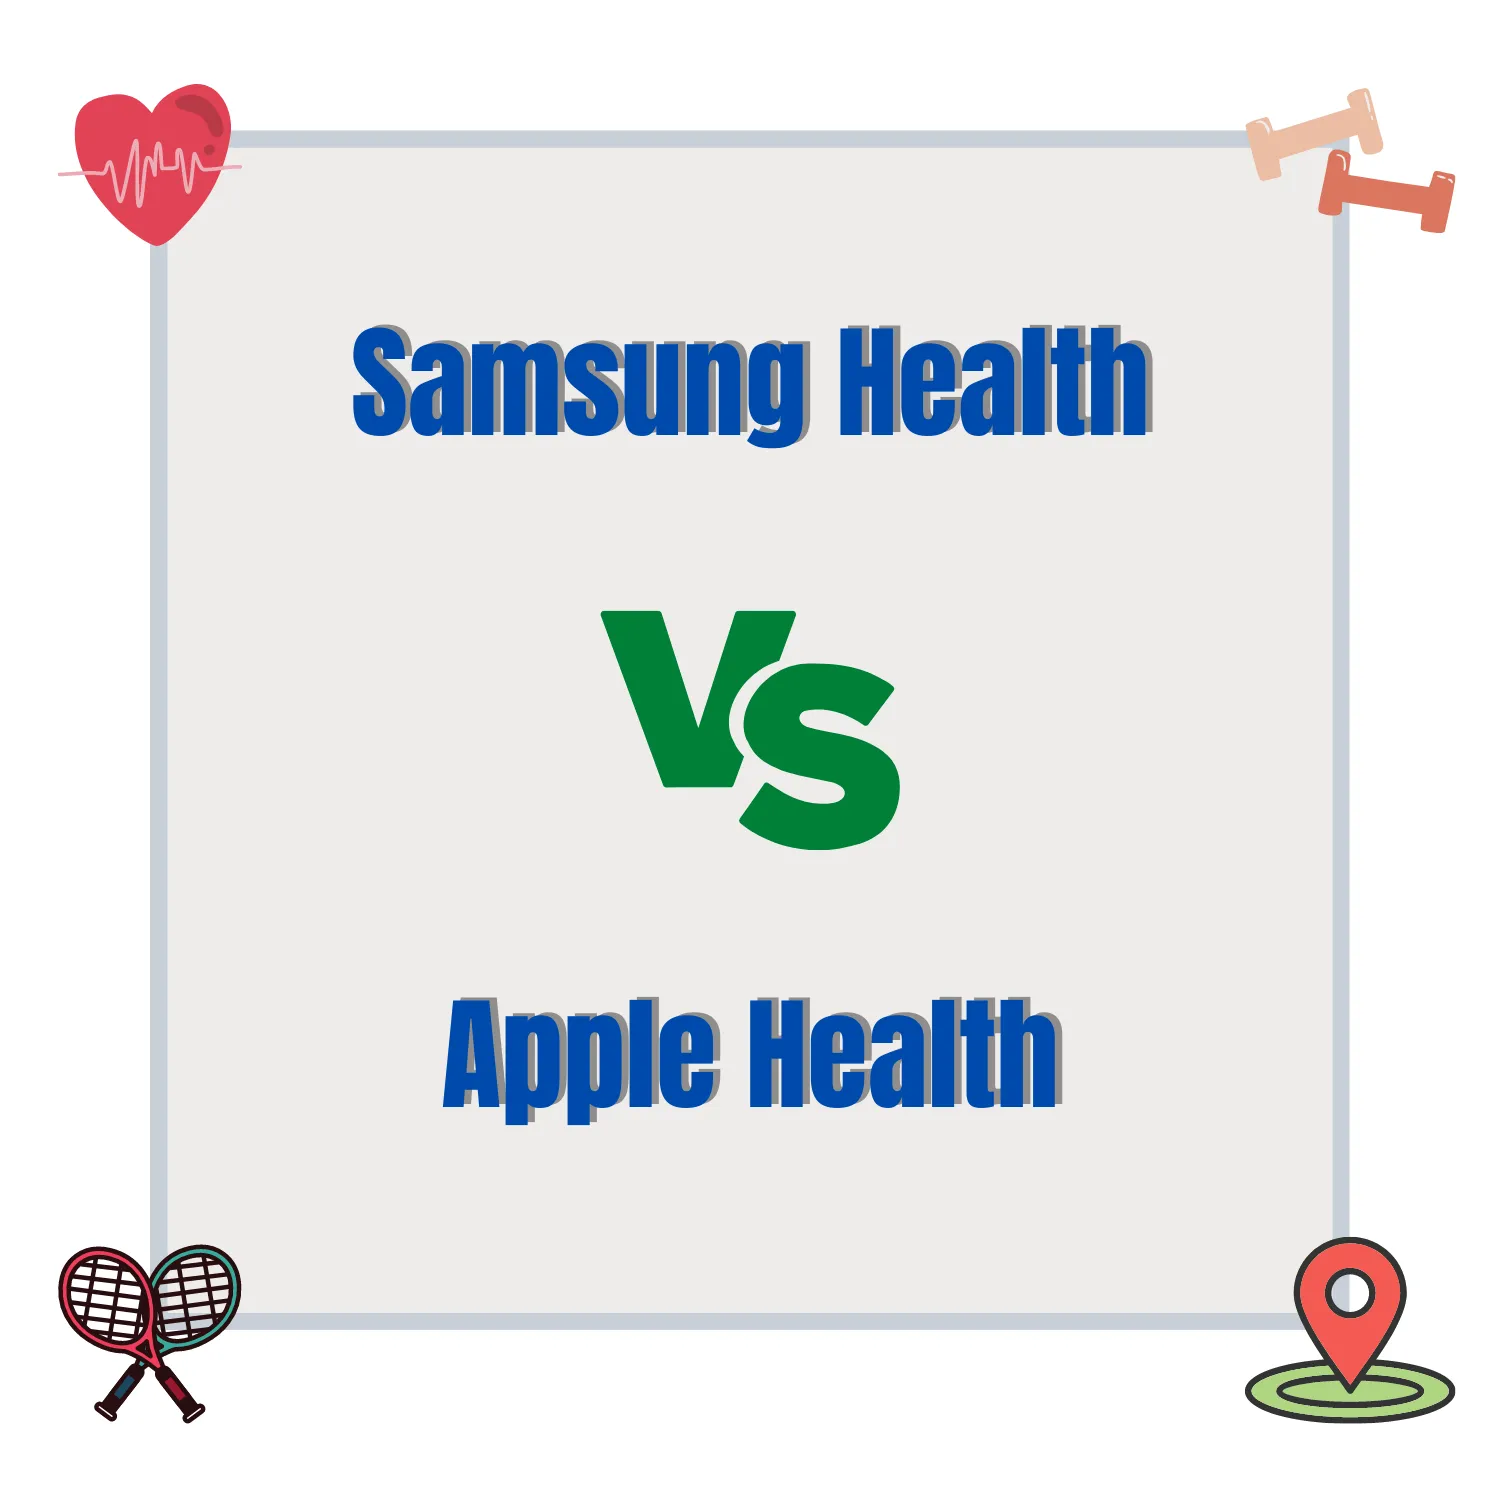 Samsung Health vs. Apple Health